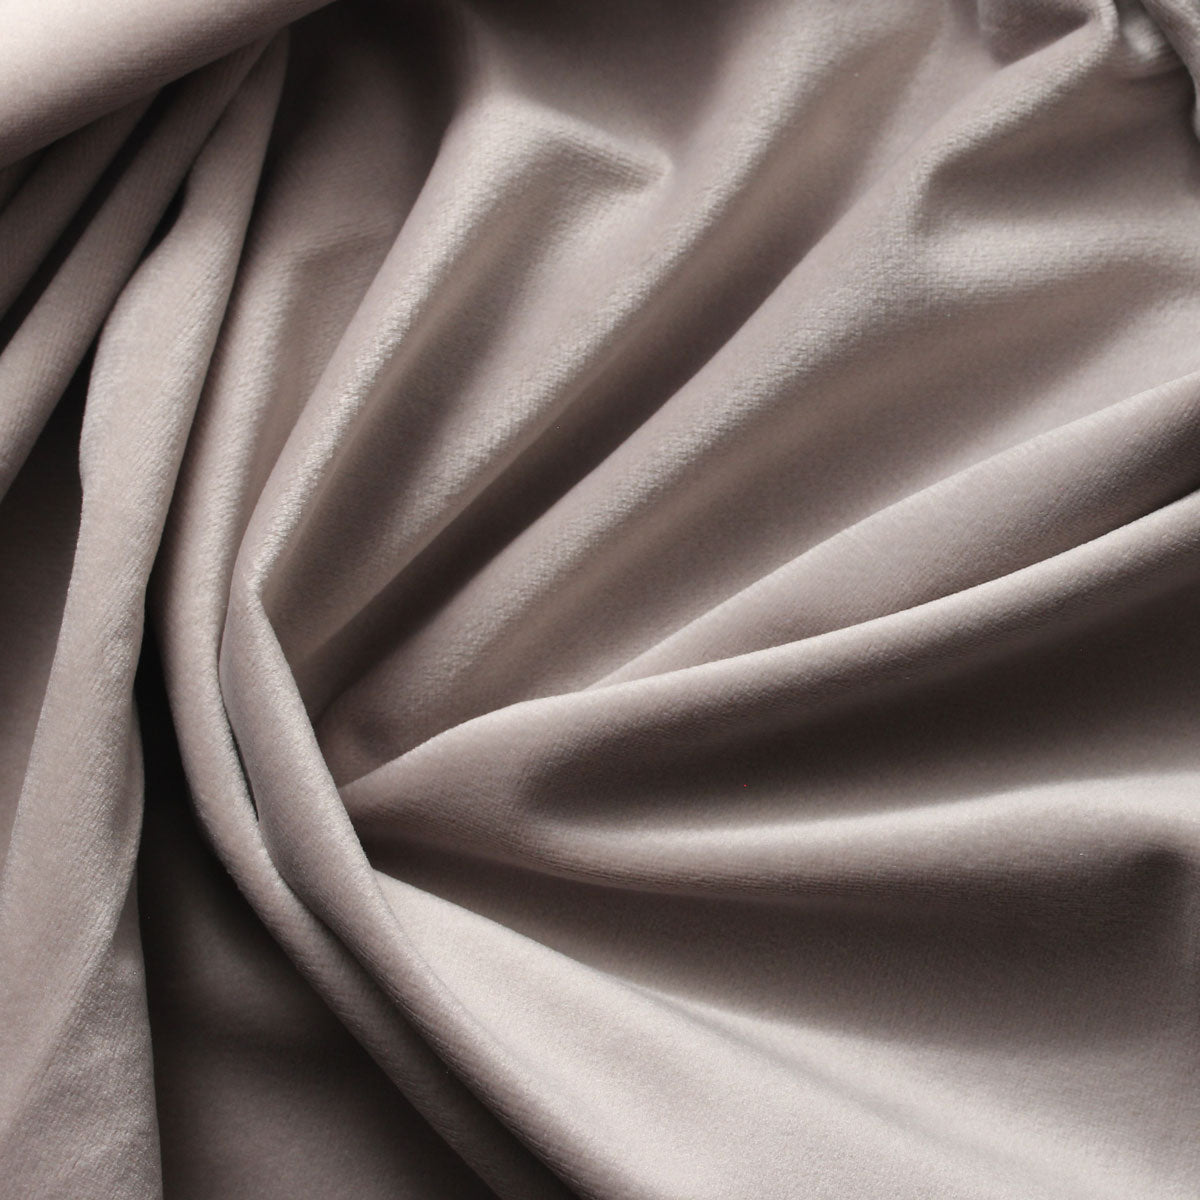 Thunder Gray Camden Velvet Polyester Upholstery Drapery Fabric - Fashion Fabrics Los Angeles 